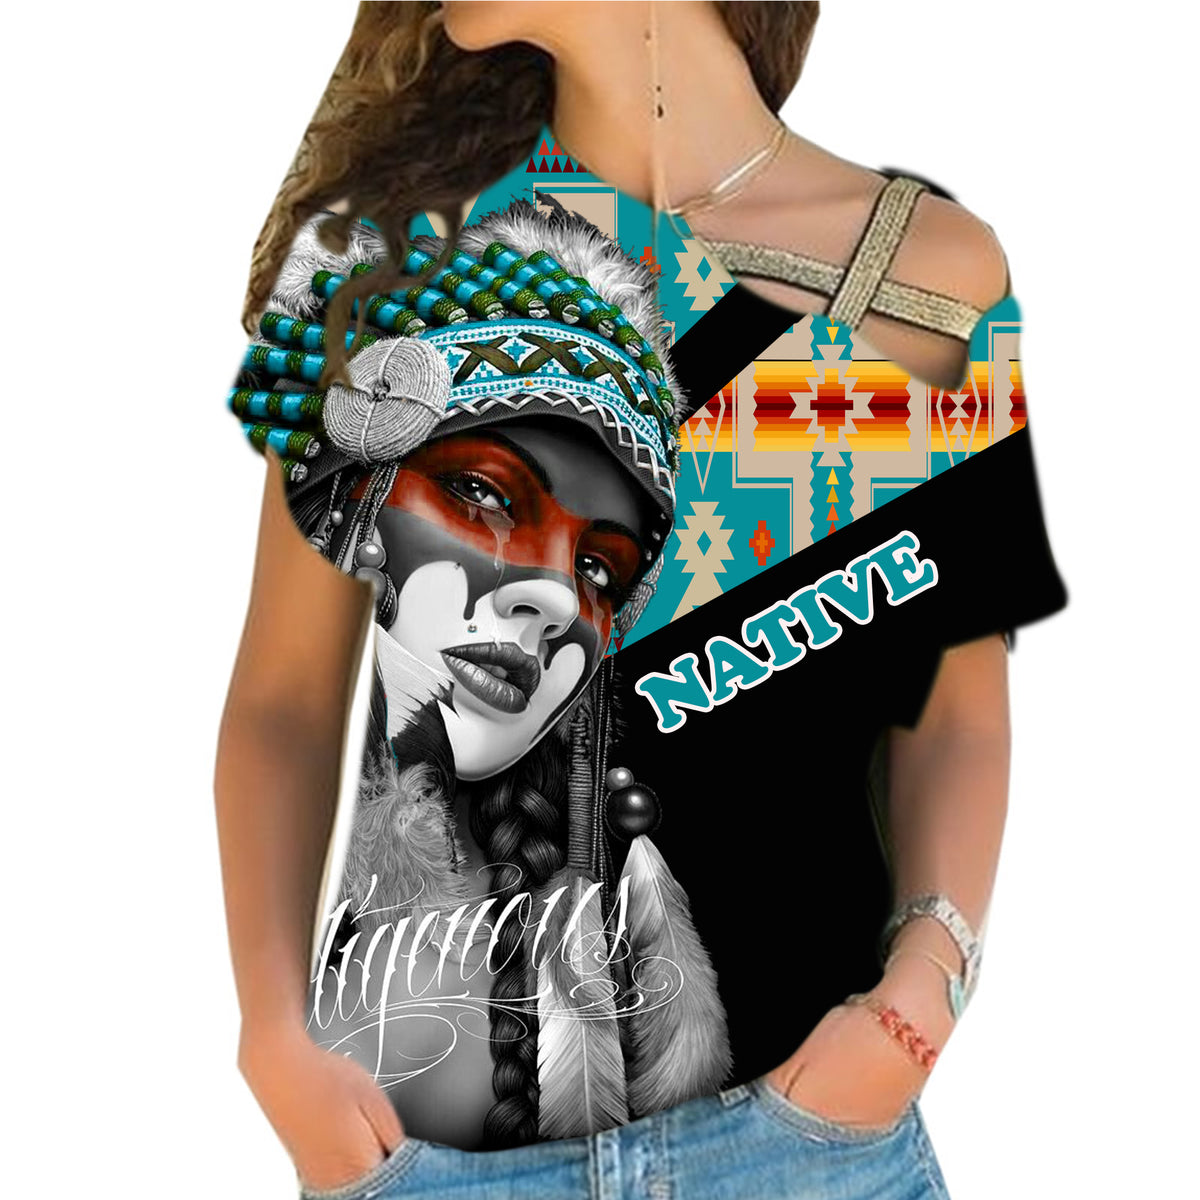 Powwow StoreCRS0001242 Native American Cross Shoulder Shirt